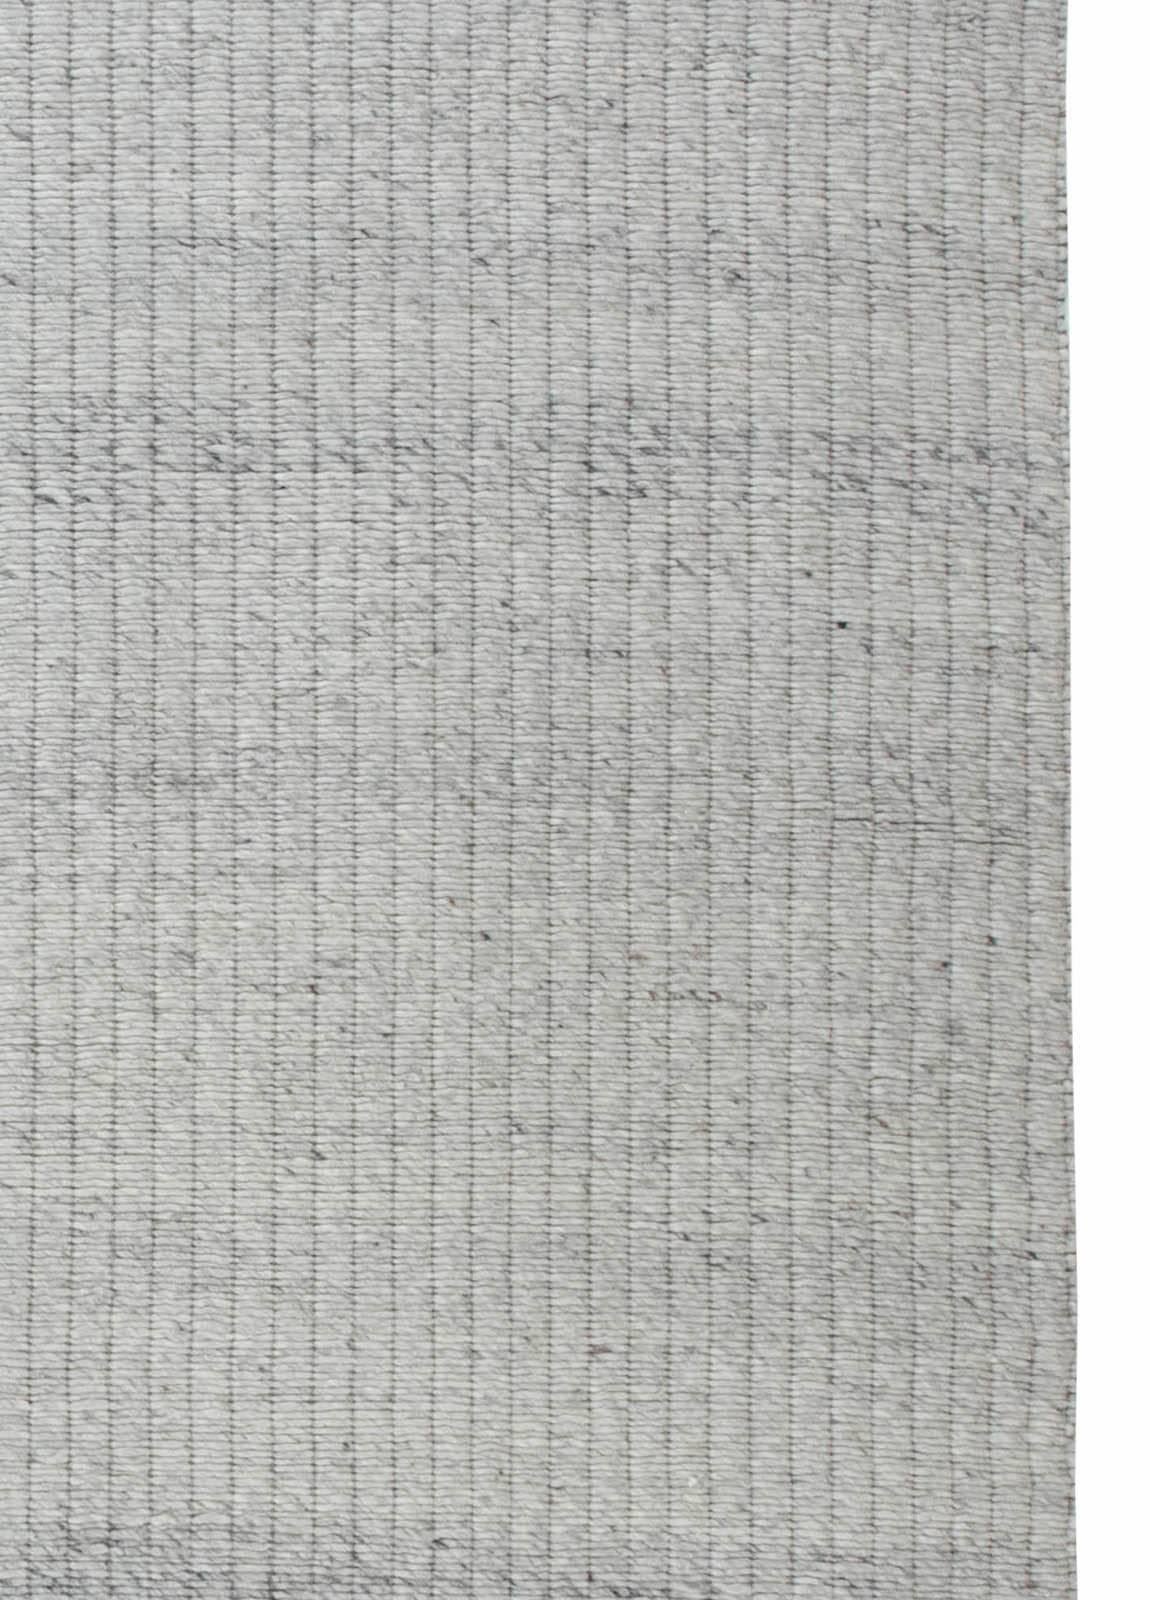 Contemporary Modern Geometric Grey, White and Black Carpet by Doris Leslie Blau For Sale